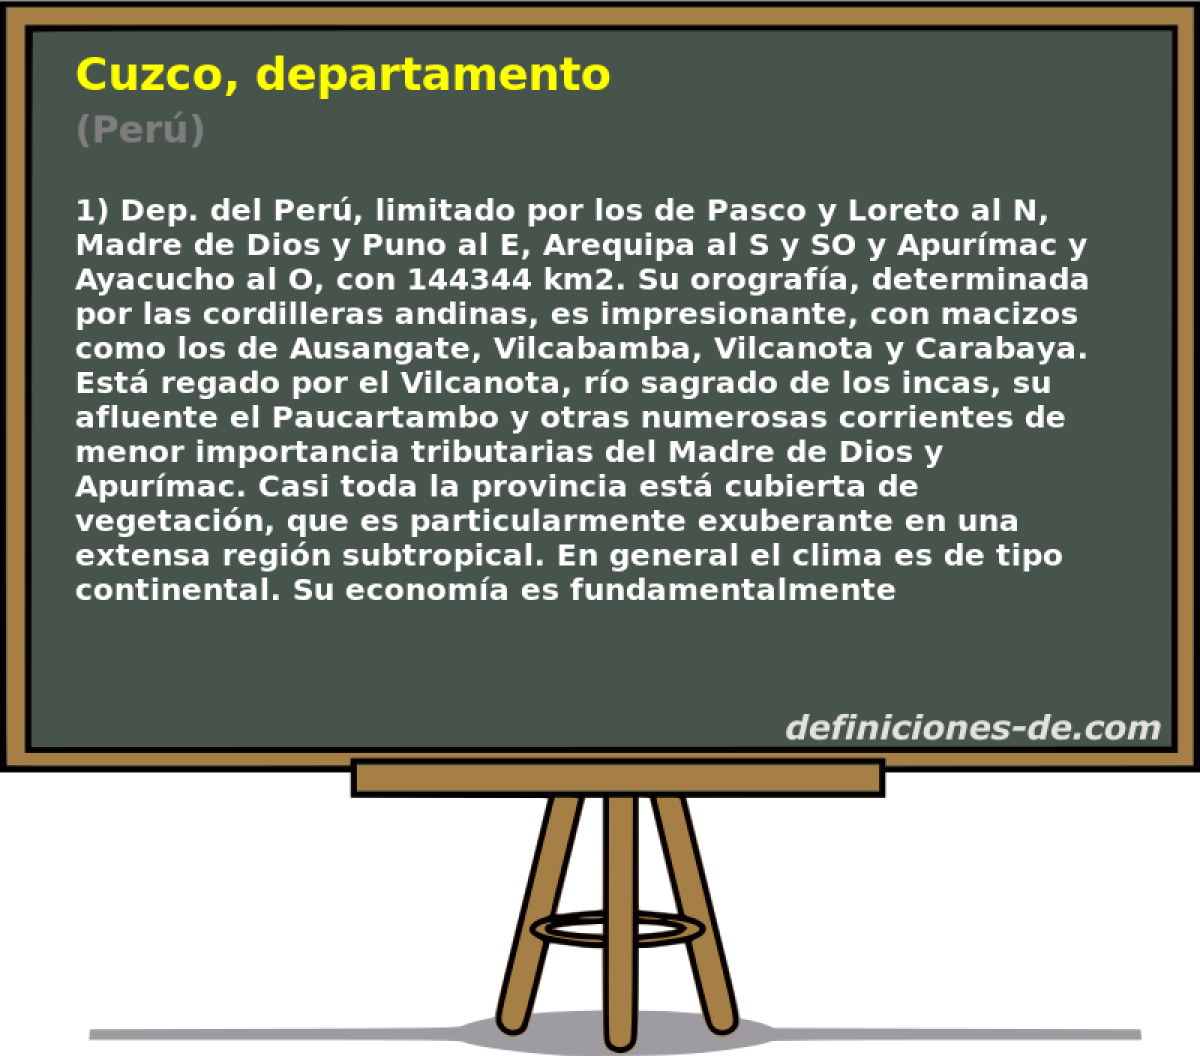 Cuzco, departamento (Per)